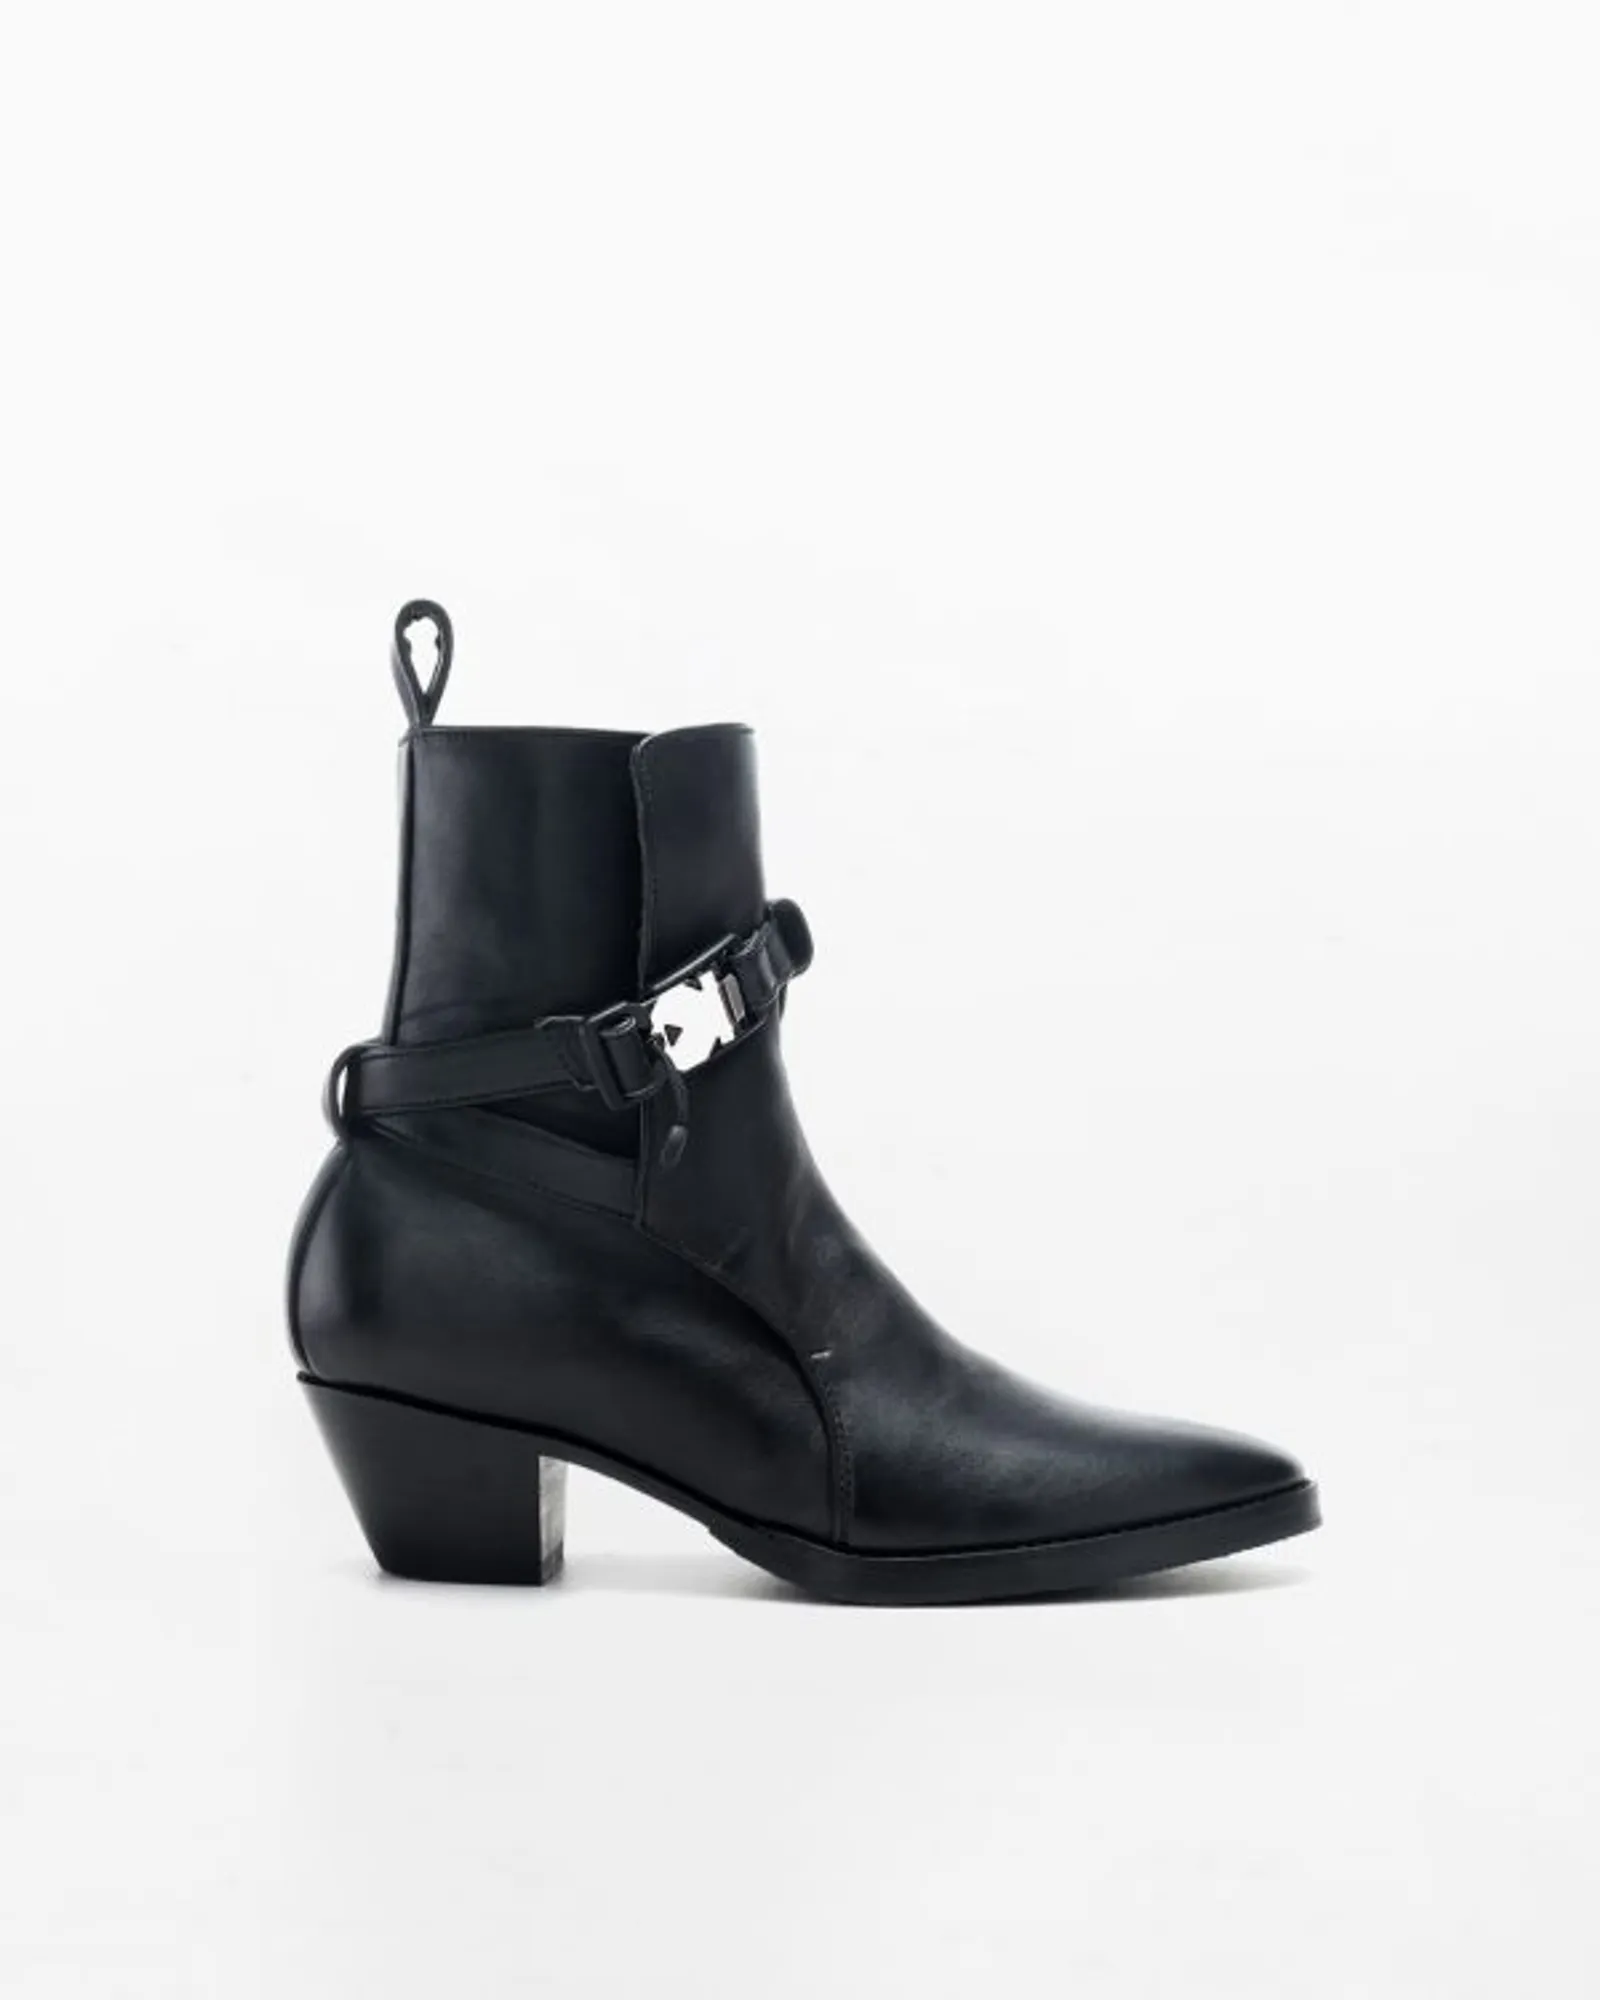 #PopbelaOOTD: Rekomendasi Ankle Boots Perempuan dari Brand Lokal